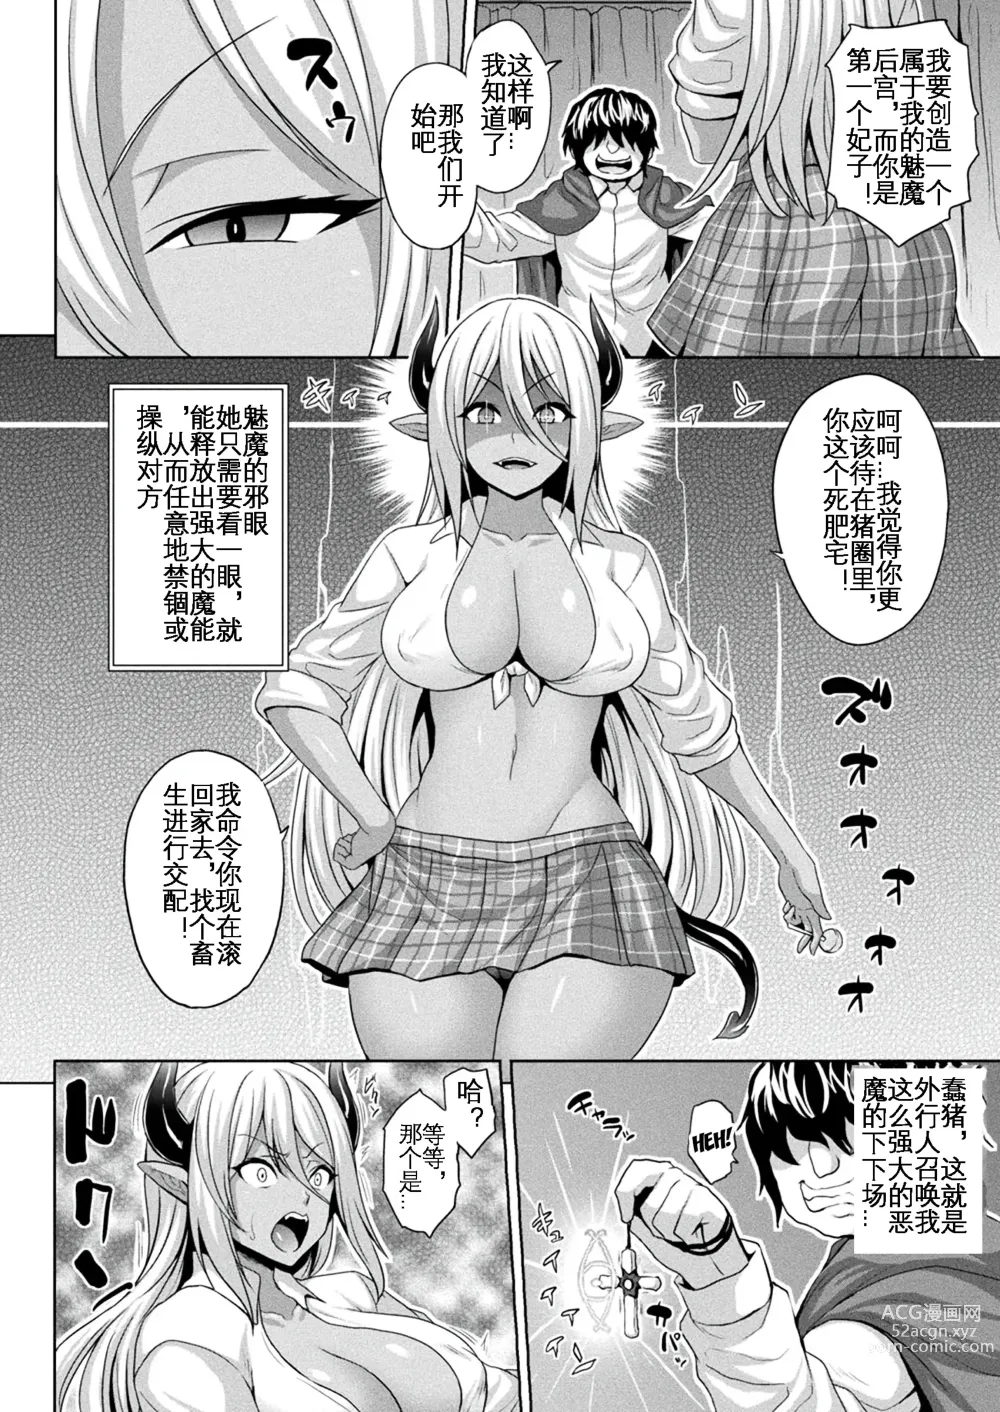 Page 3 of manga Mesubuta Inma no Chigiri - Contract of Bitch Succubus